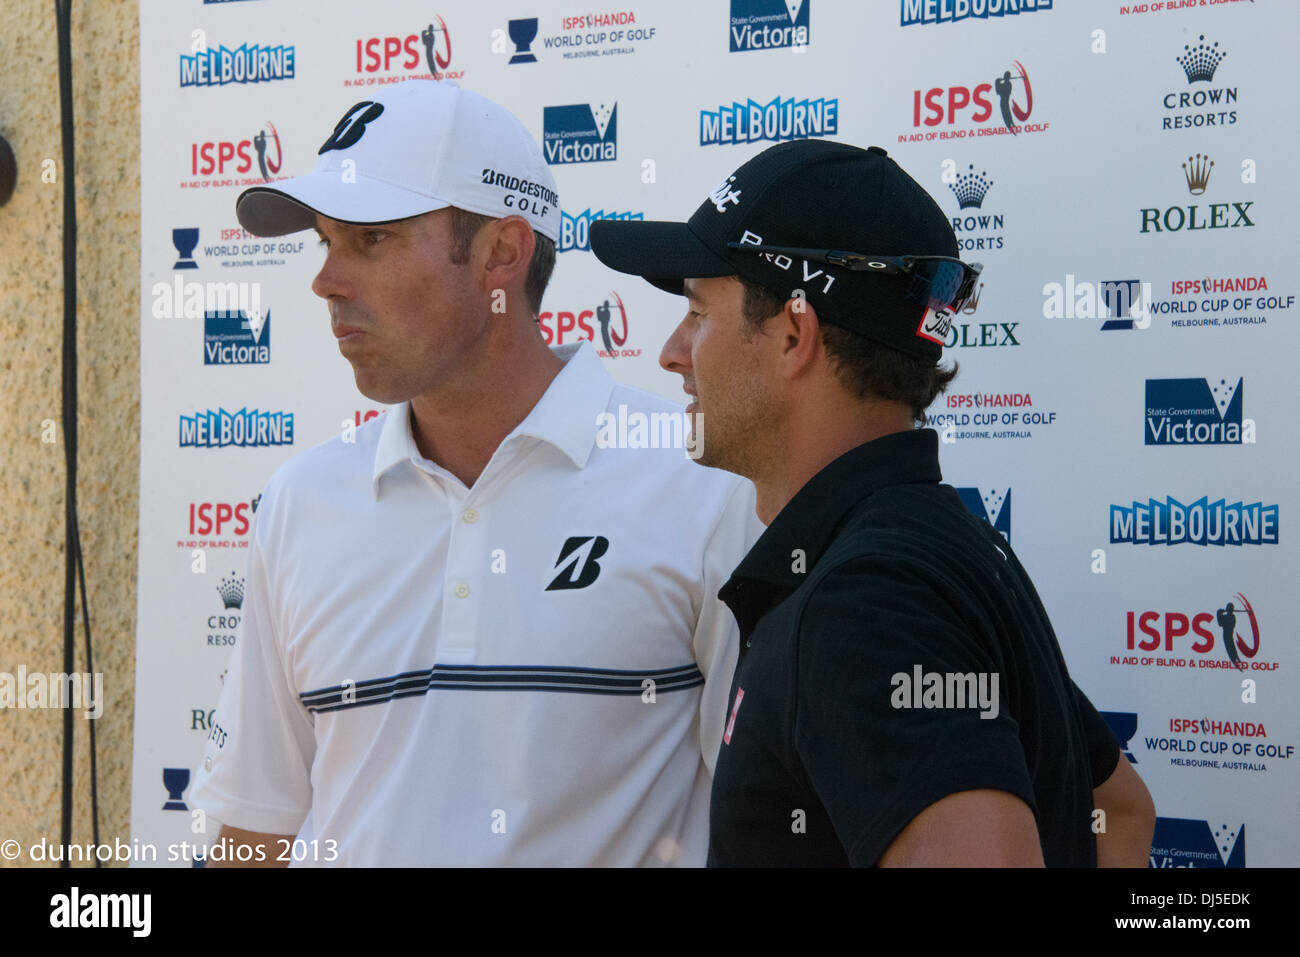 Adam Scott portrait with Matt kutchar usa golfer at royal melbourne golf club interview Stock Photo